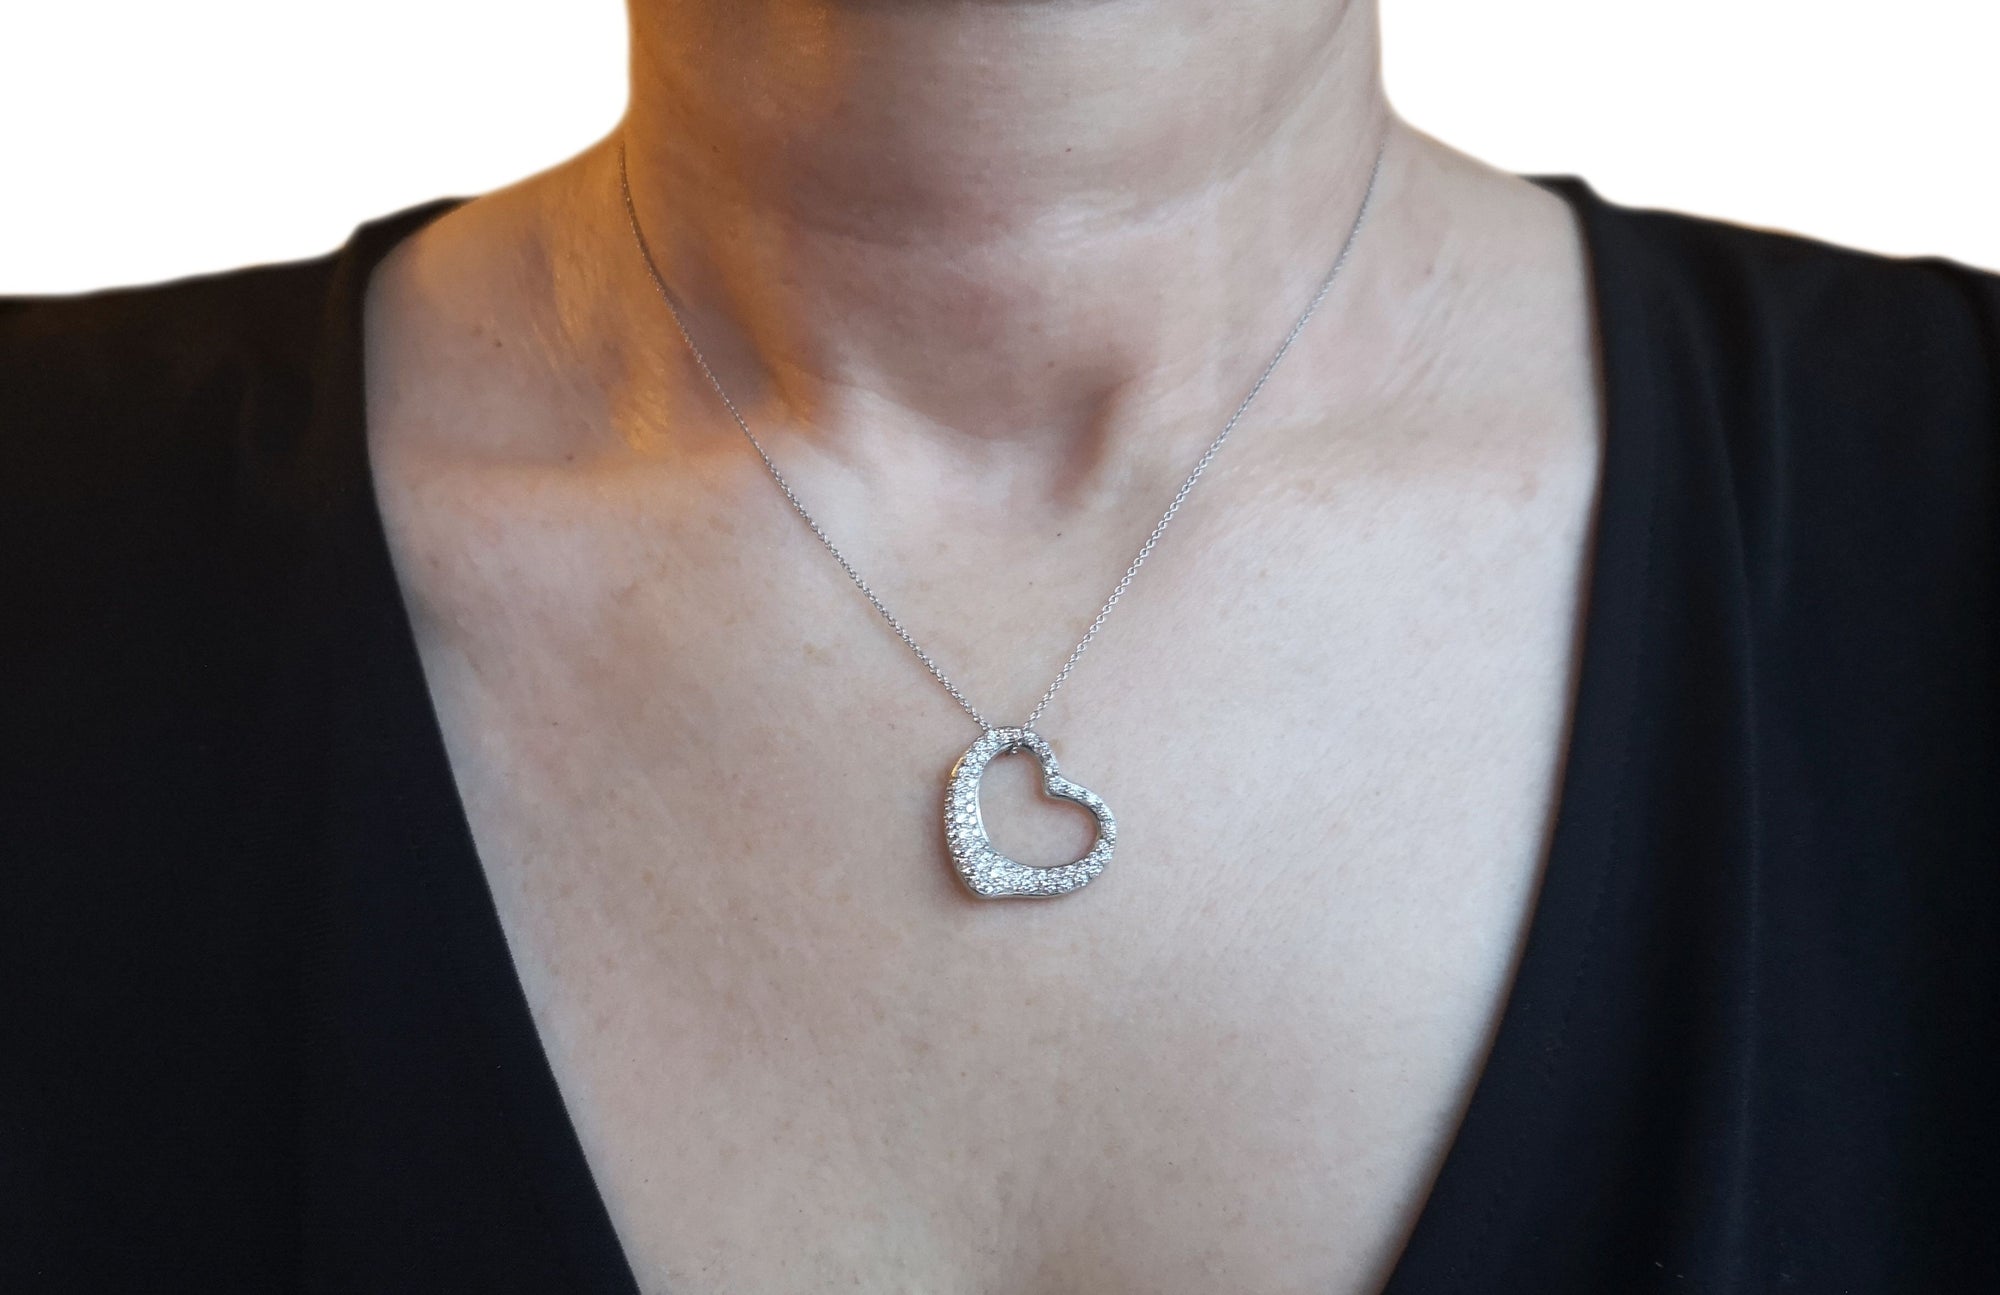 Tiffany & Co. Elsa Peretti Pave Heart Diamond Necklace, Medium